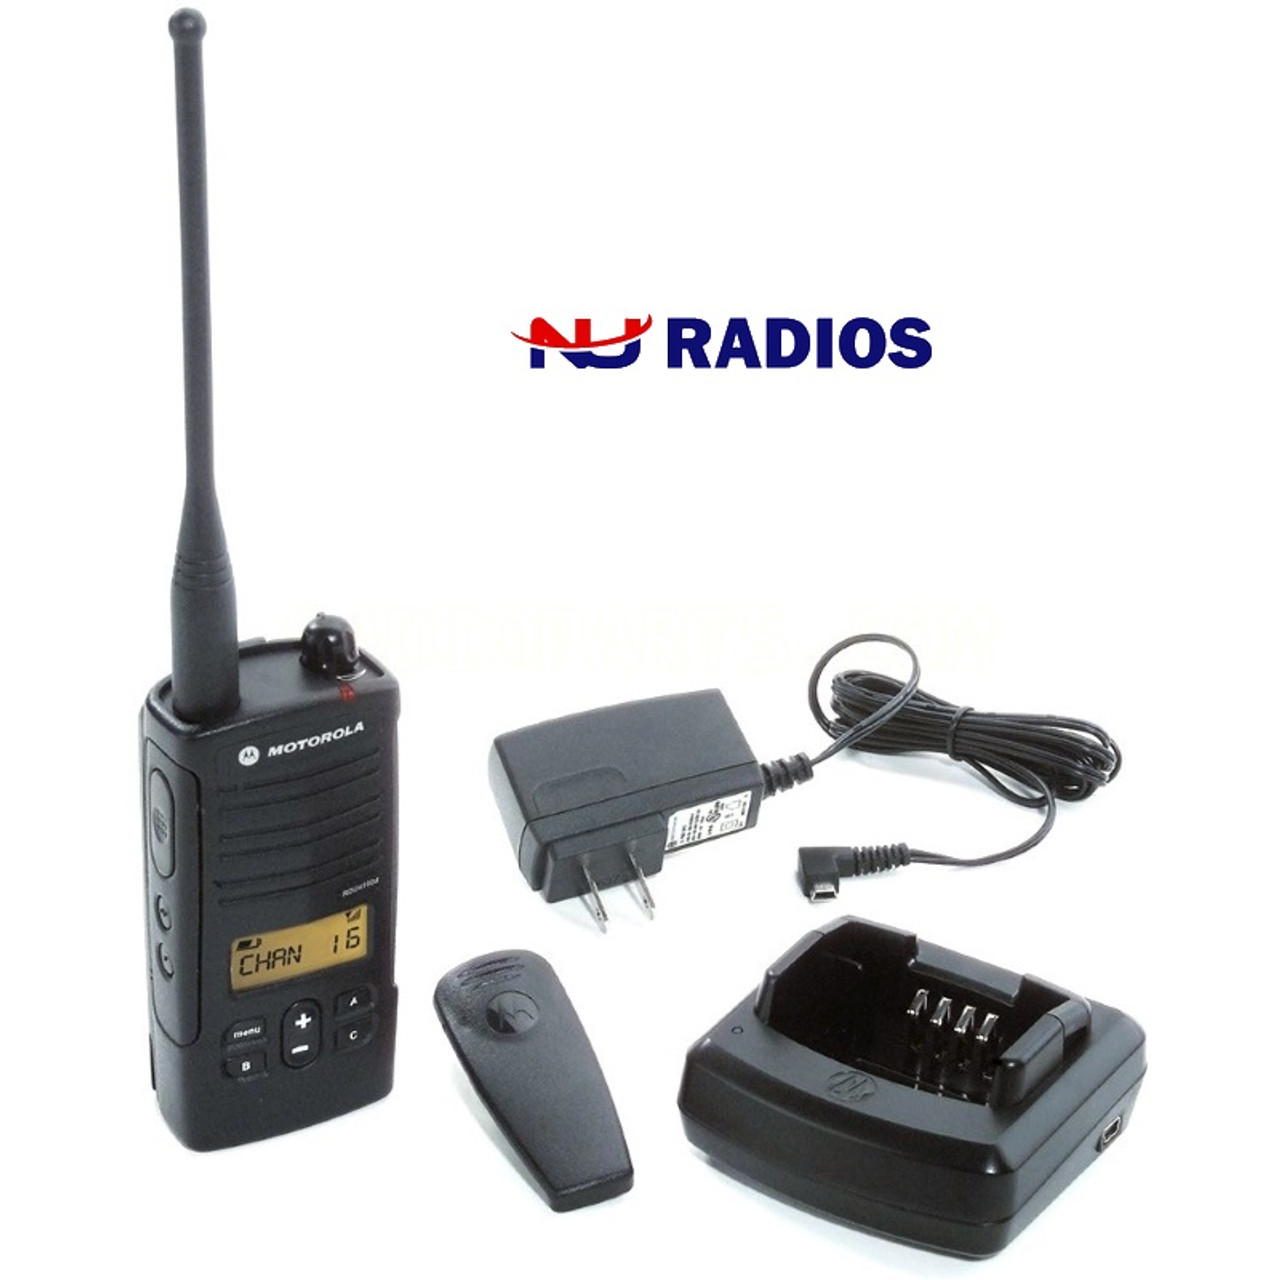 x Motorola RDU4160D RDX Business Series Two-Way UHF Radio with Display (Black) (RDU4160D) - 4